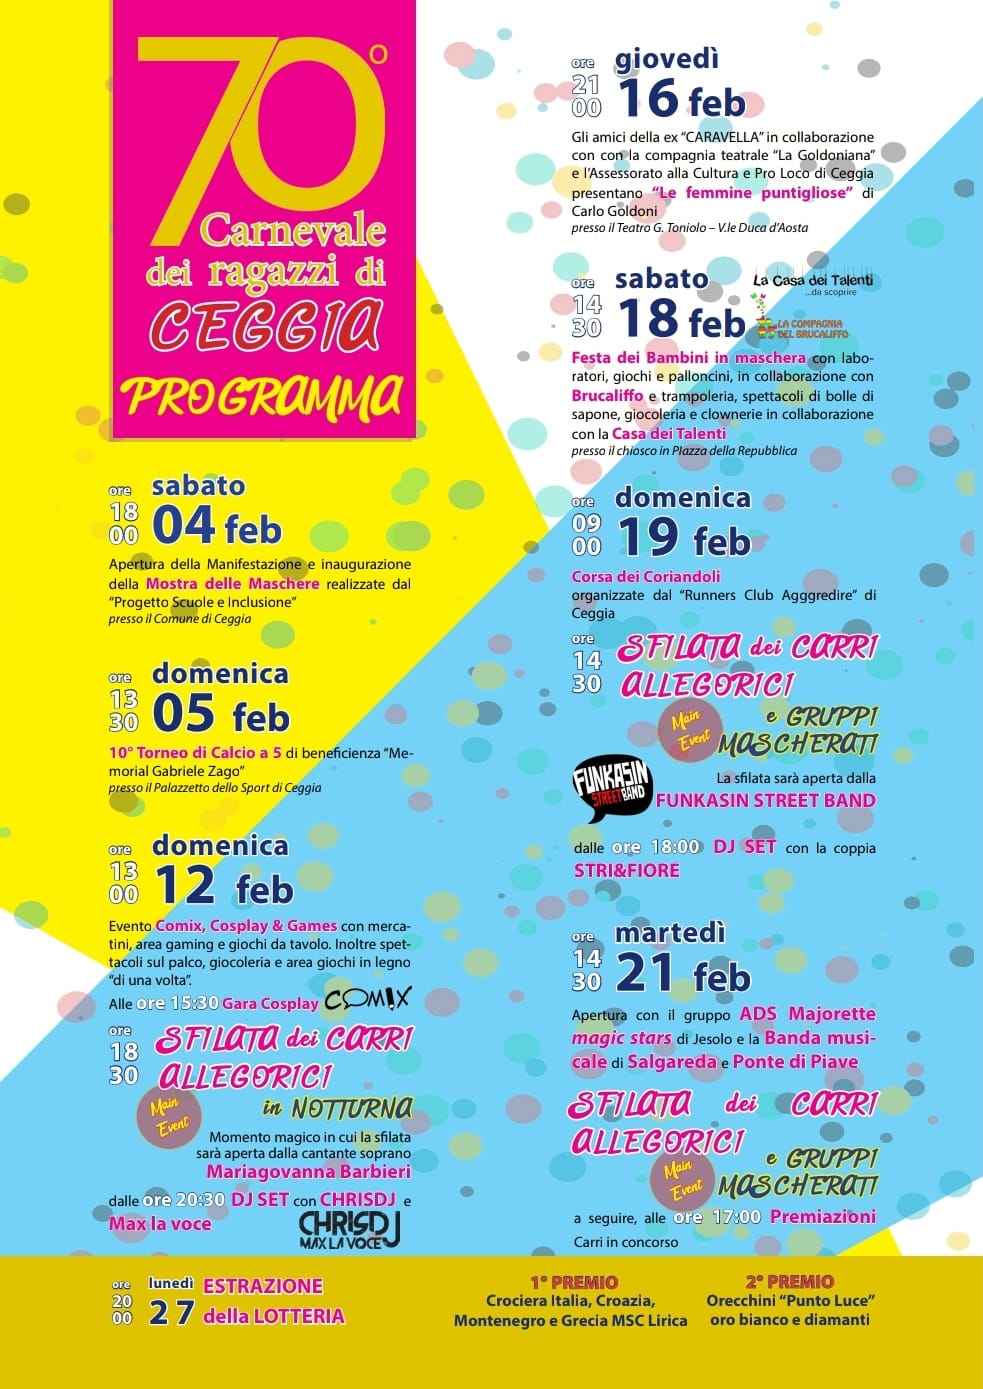 Ceggia (VE)
"Carnevale 2023"
Febbraio 2023 